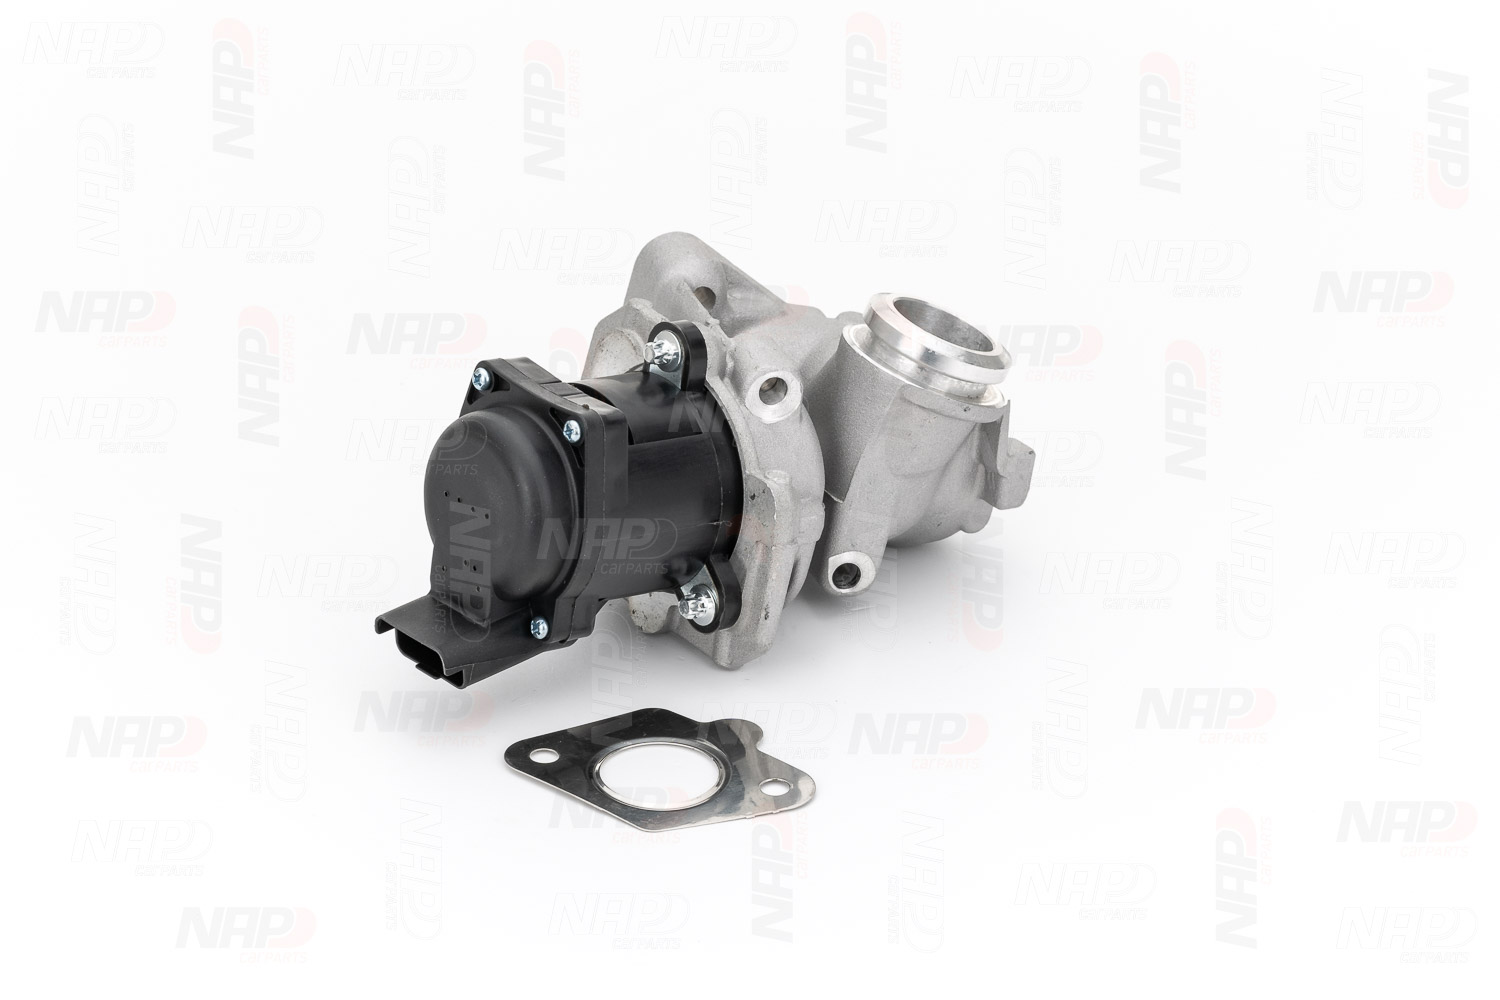 NAP carparts CAV10052 EGR valve MINI experience and price